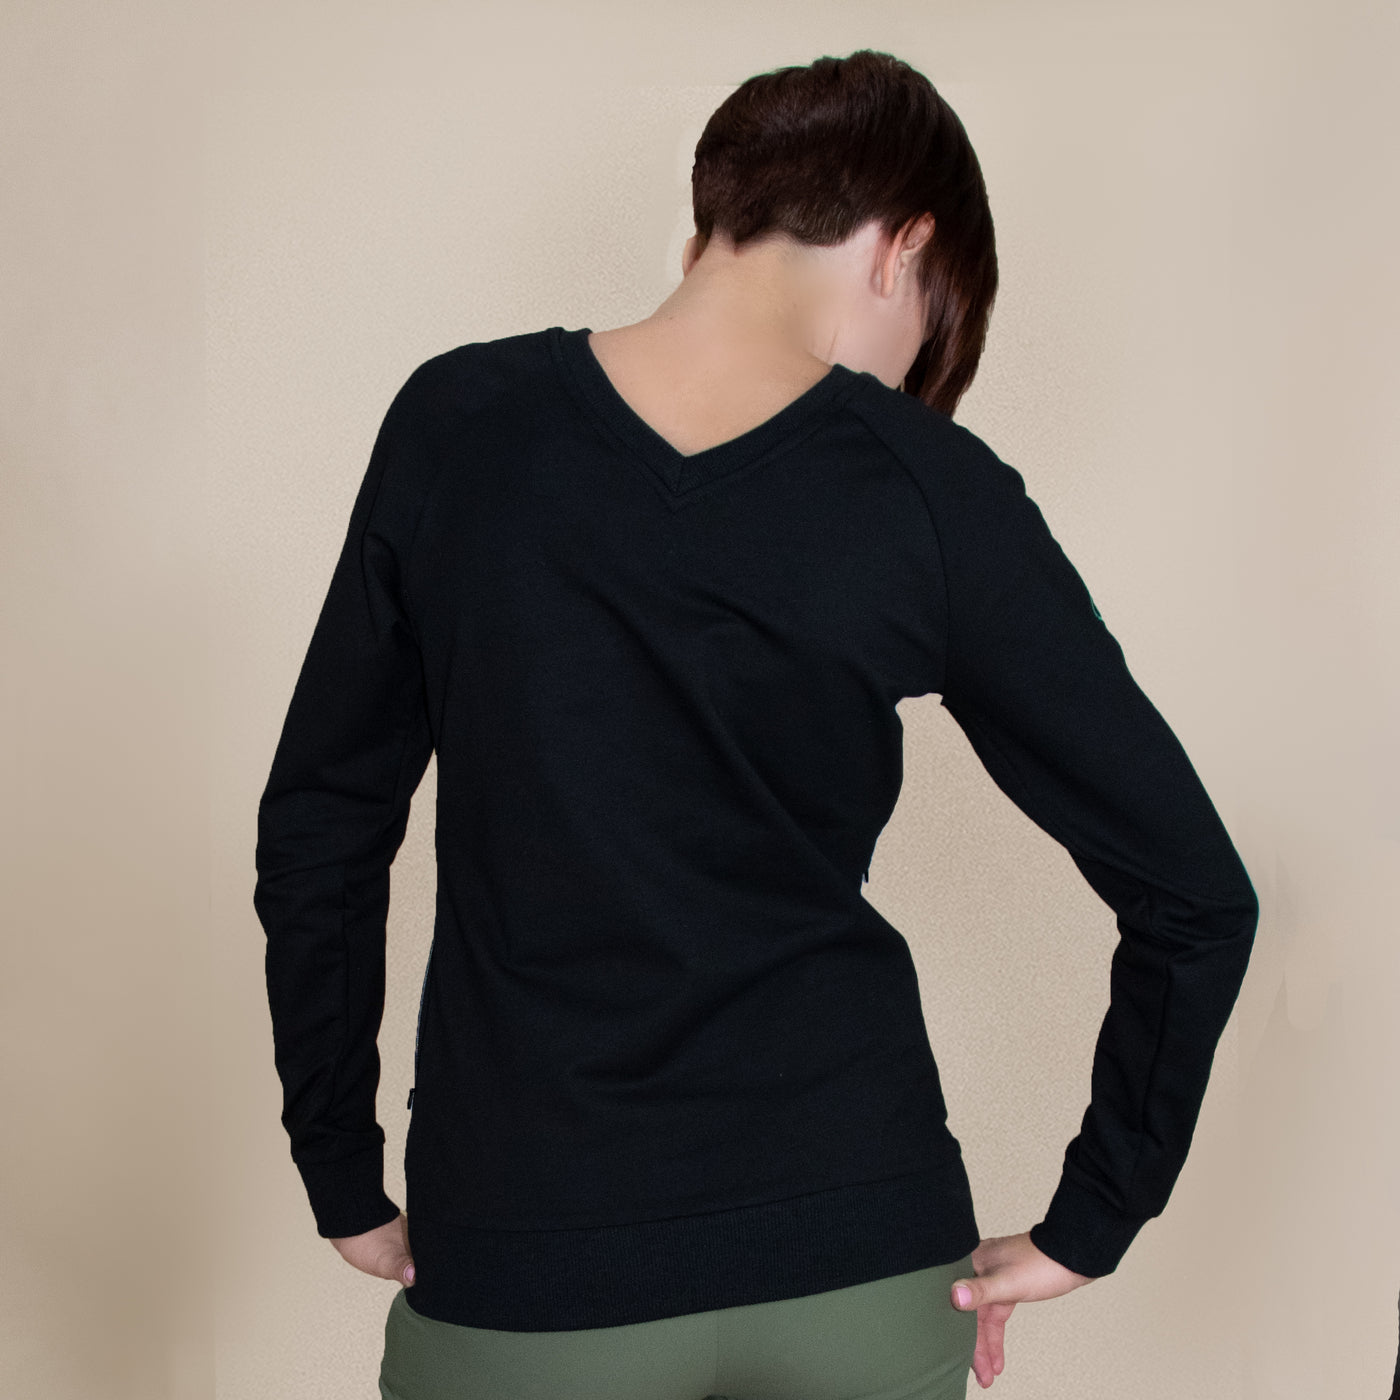 SPLICE clothing Zion 2-Way Sweatshirt black gray